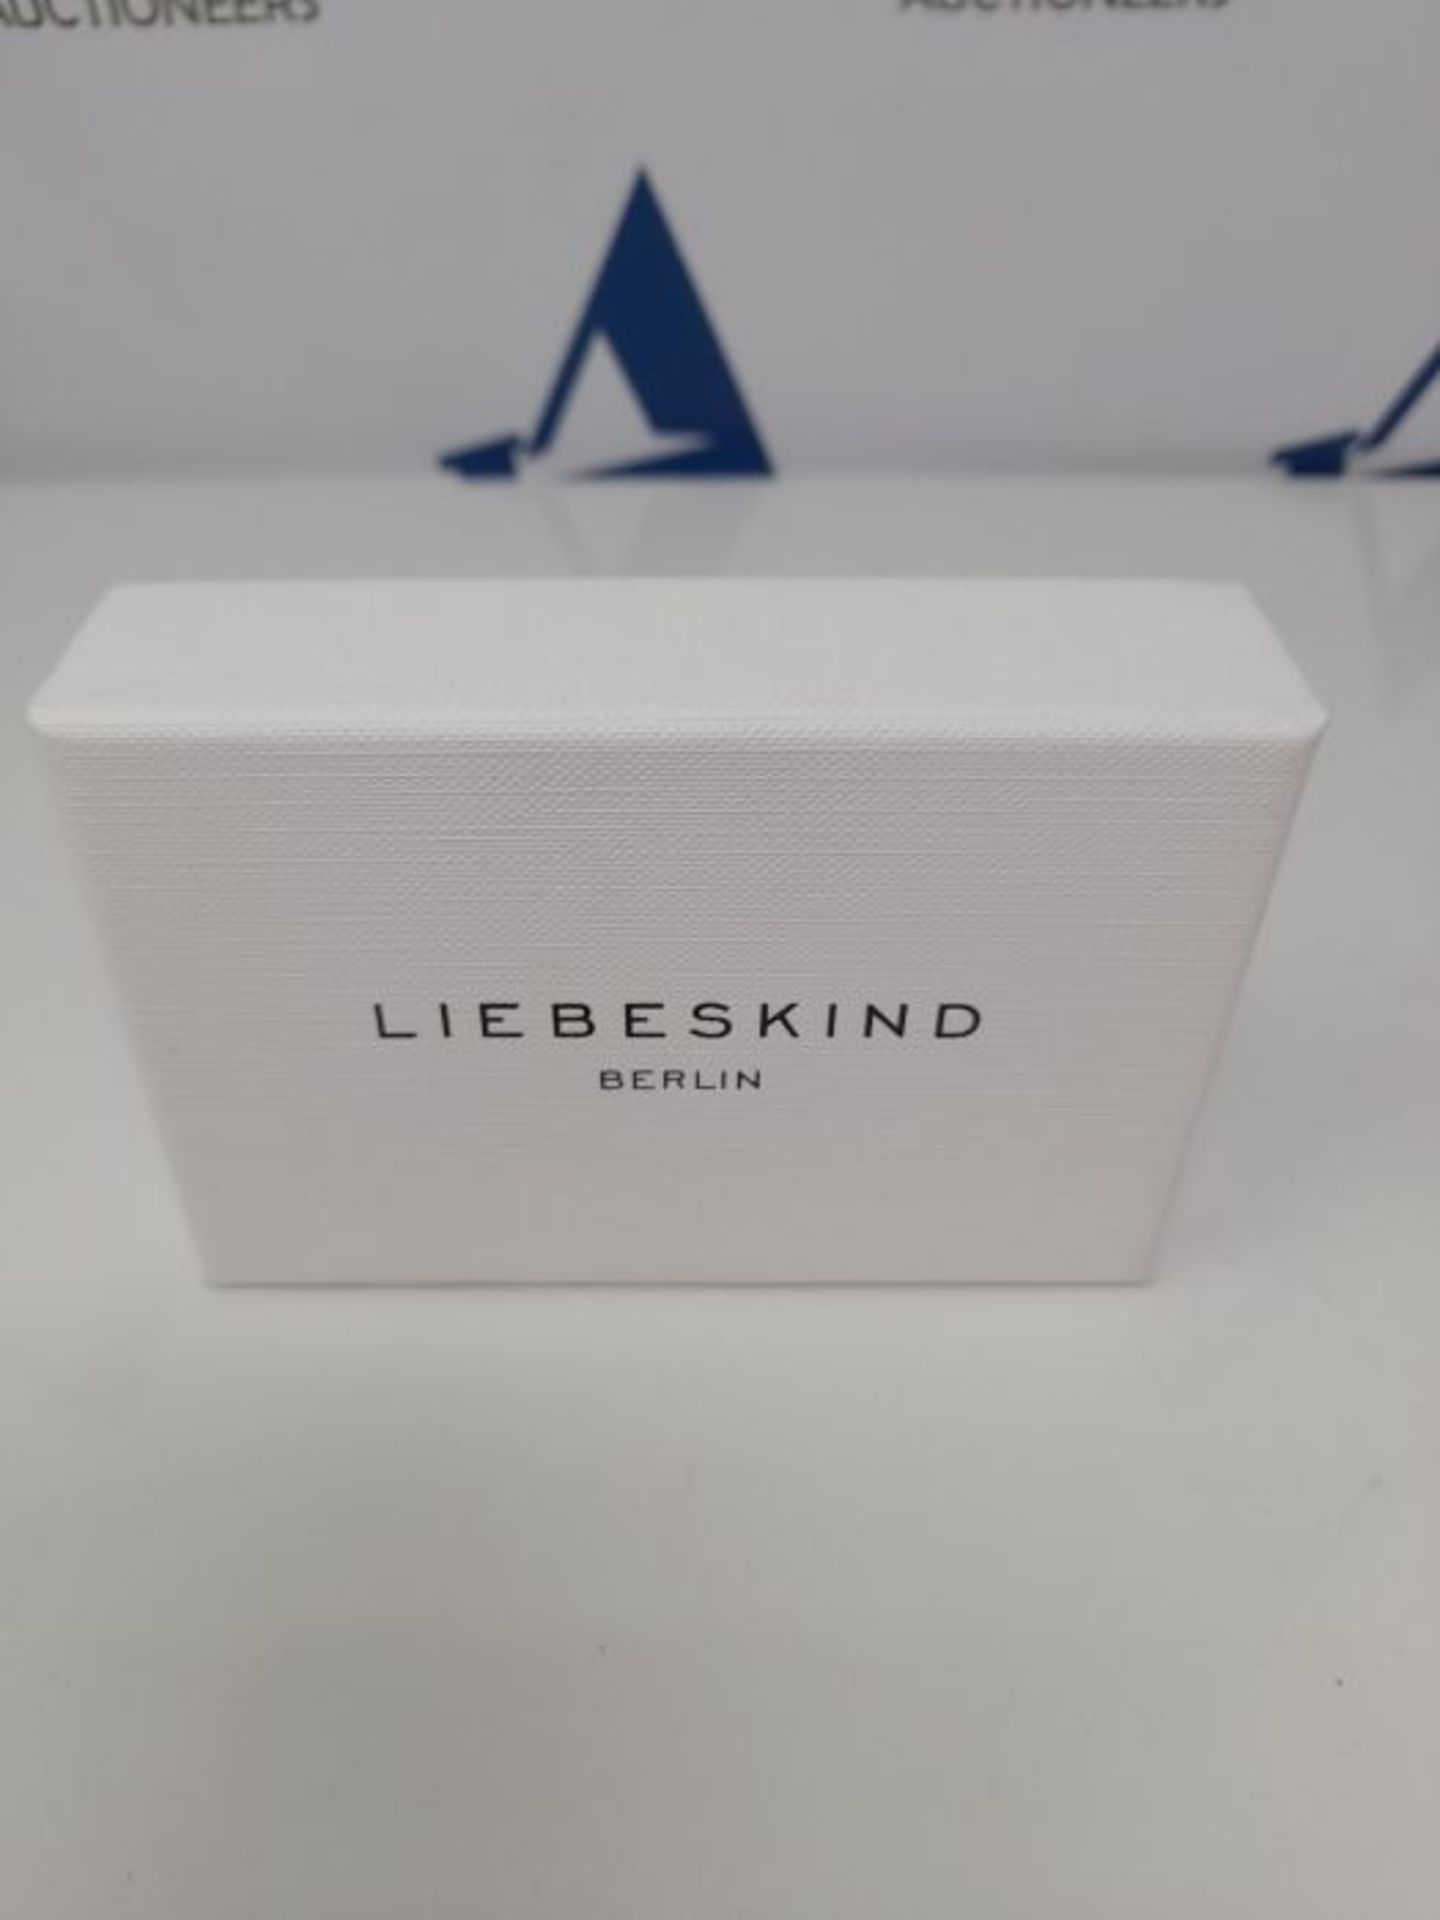 Liebeskind Berlin Bracelet, 20 cm, Stainless Steel, No gemstone., - Image 6 of 6